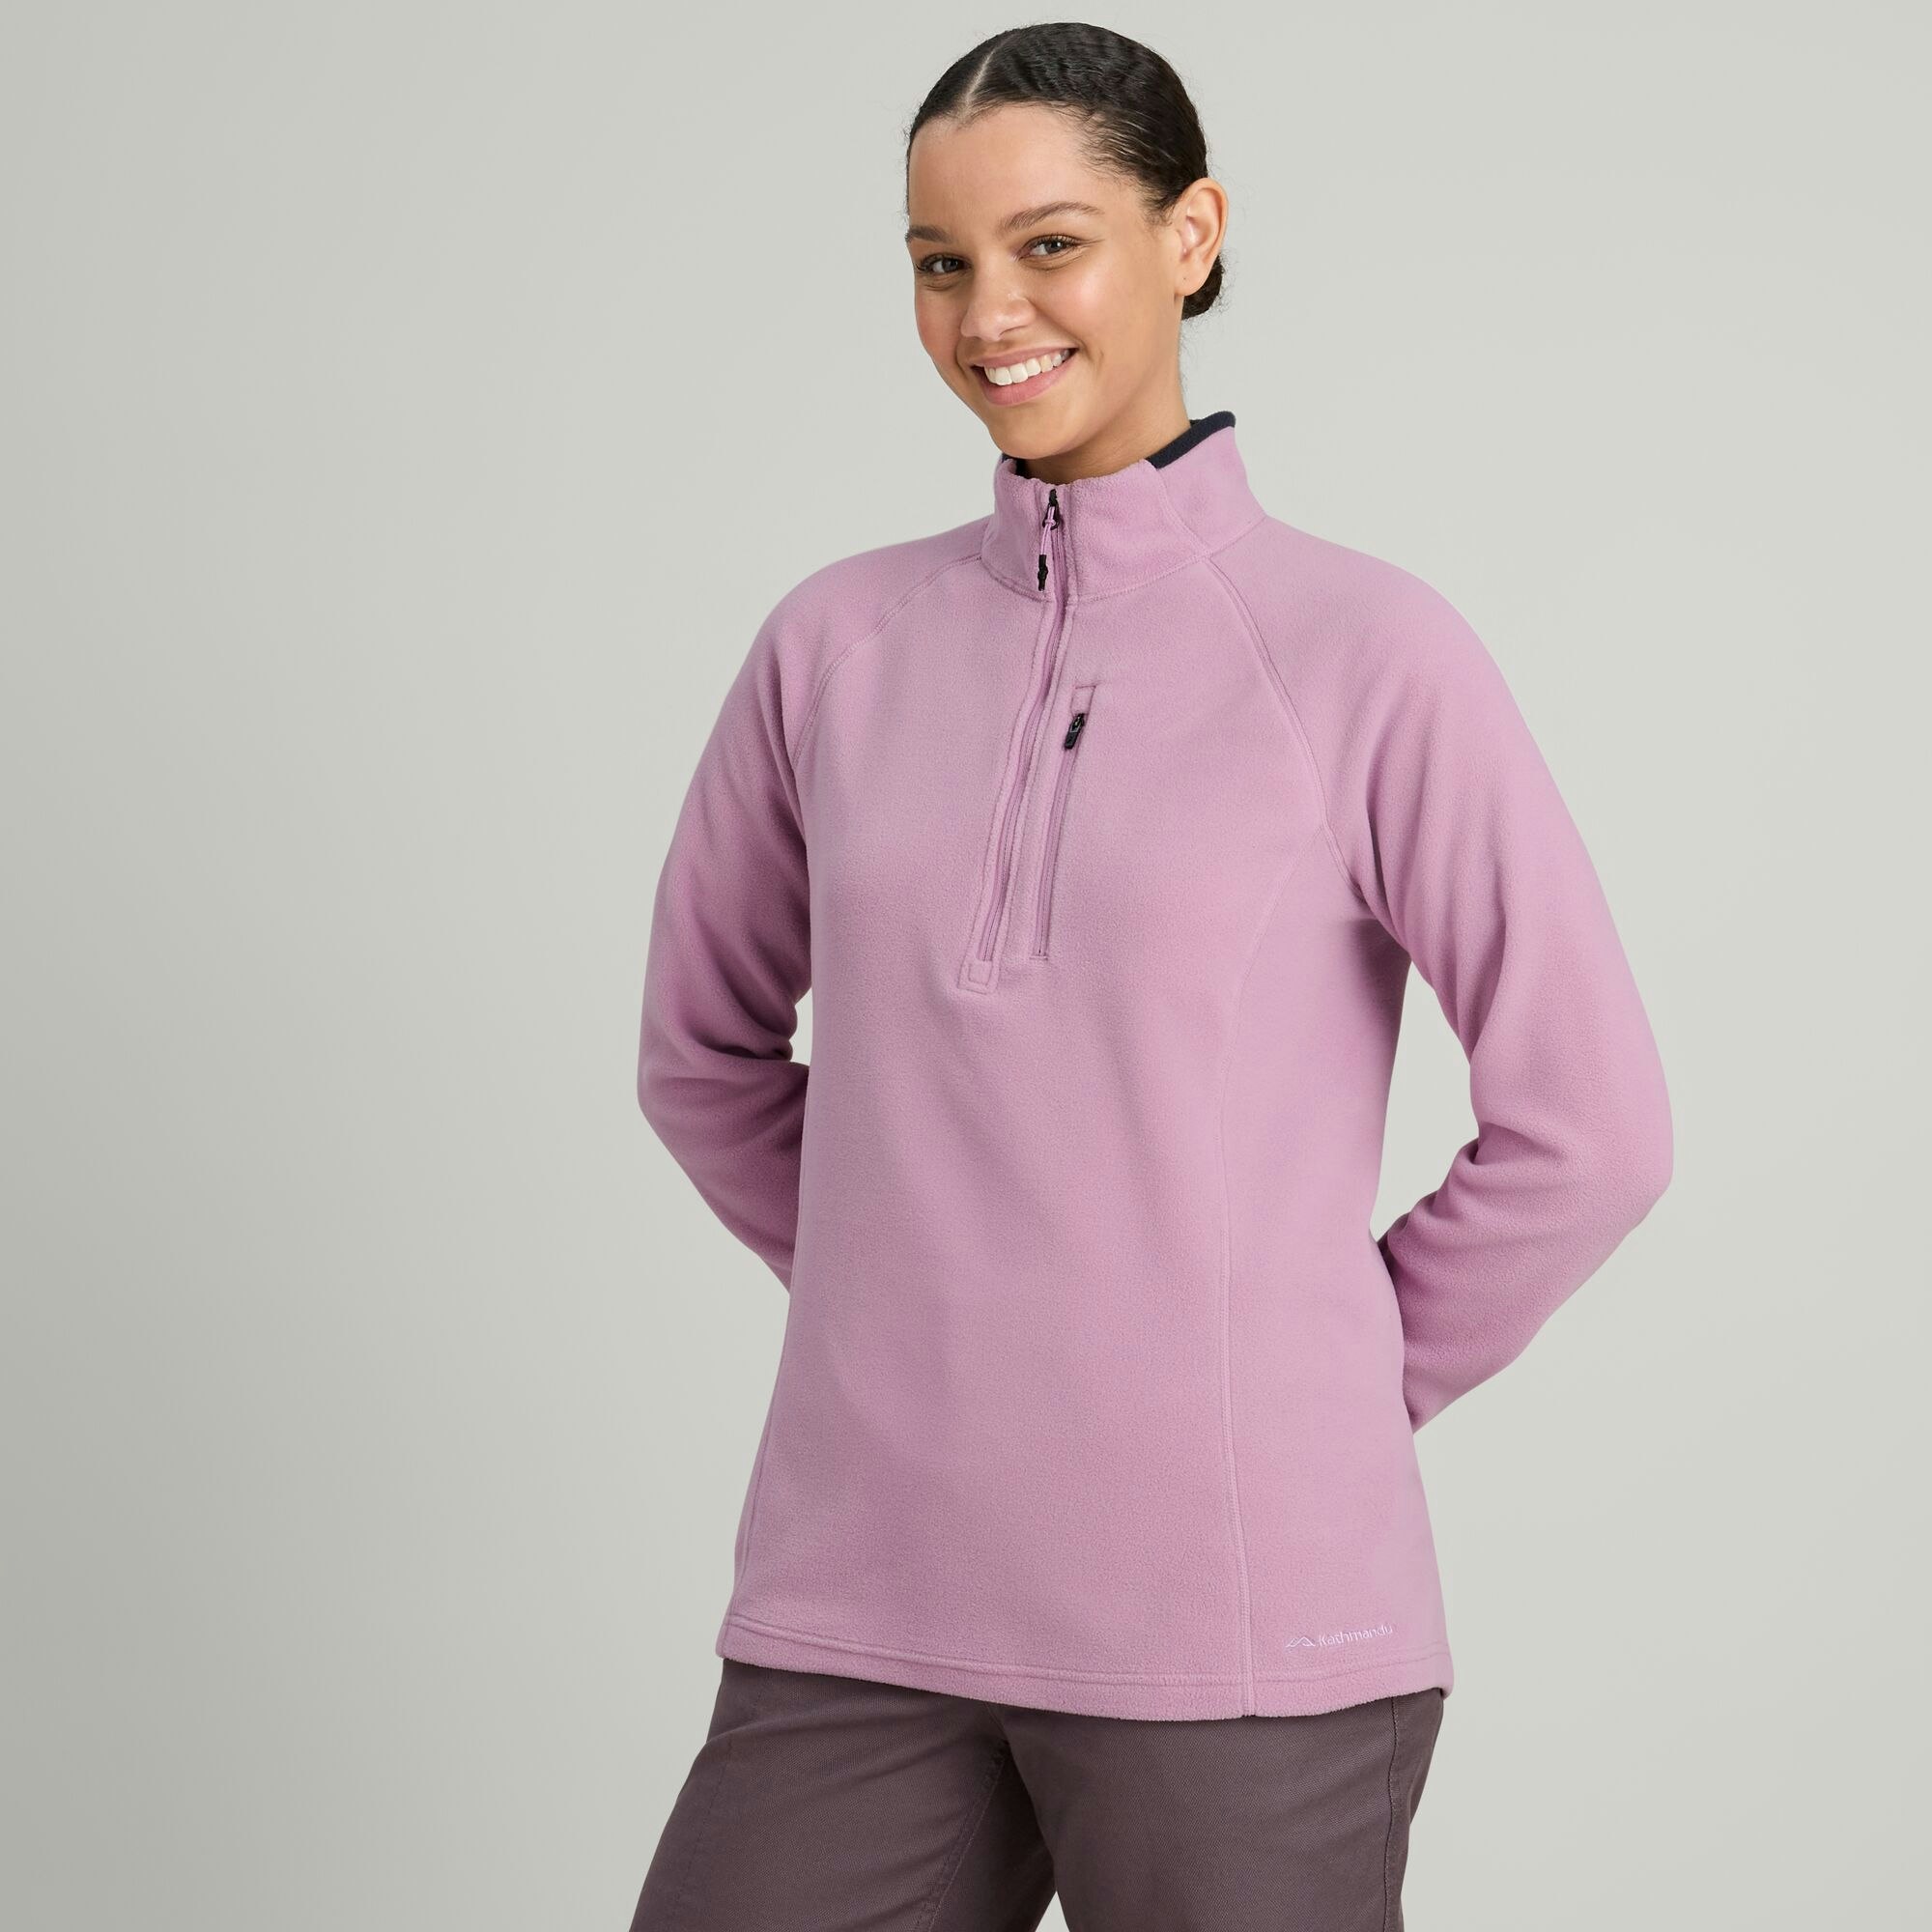 Gymboree 100% Polyester Solid Pink Fleece Jacket Size 12-24 mo